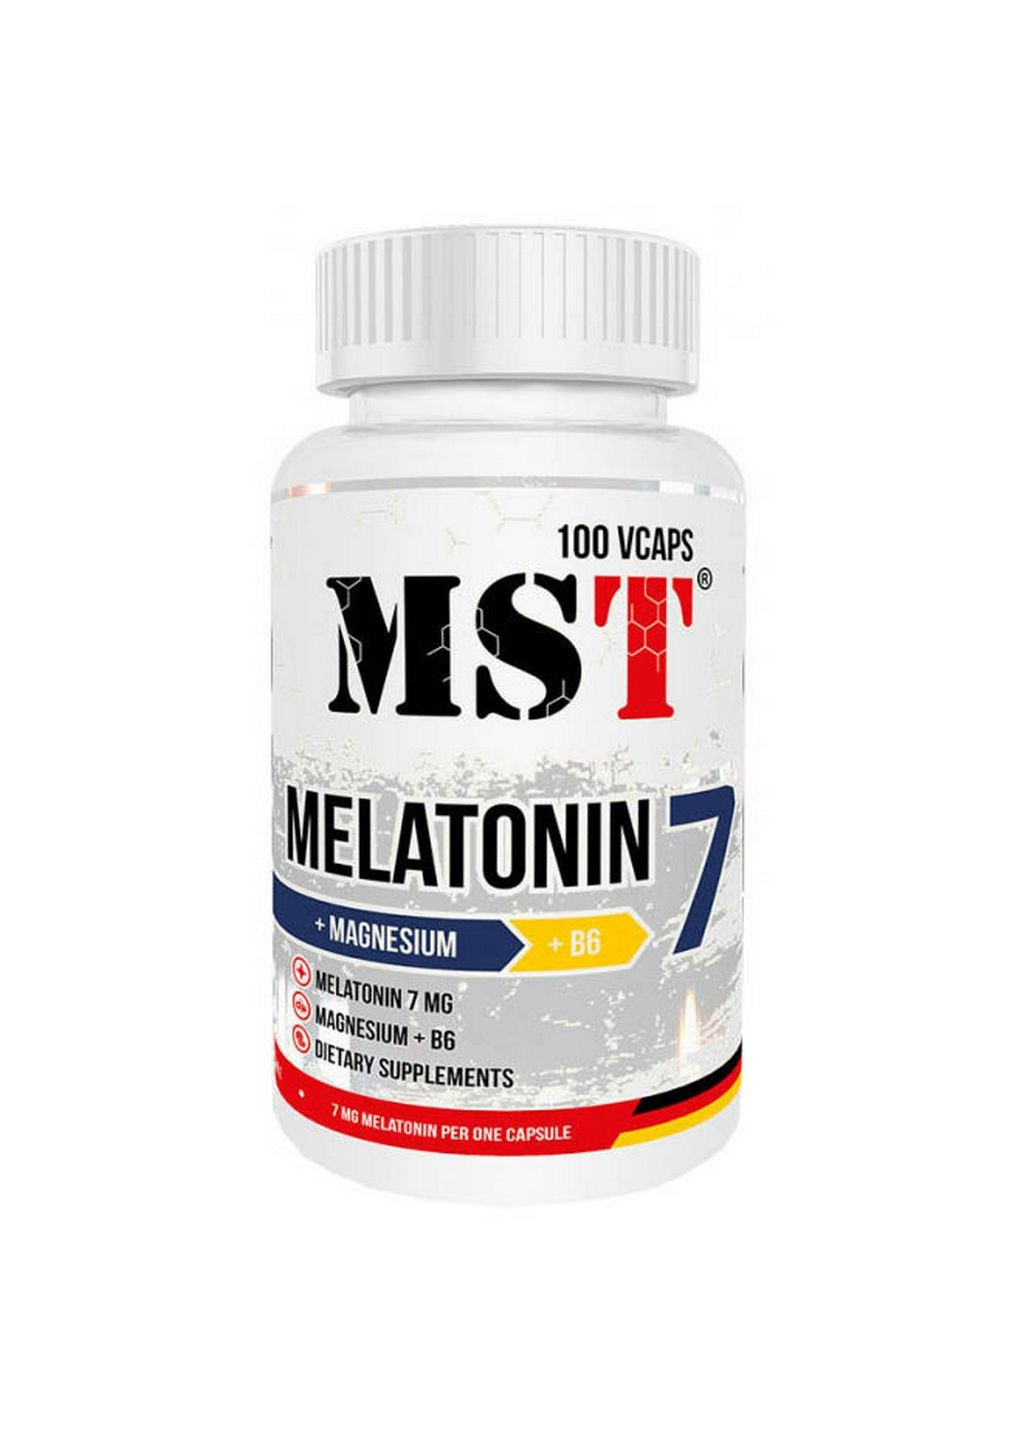 Натуральная добавка Melatonin 7 + Magnesium + B6, 100 вегакапсул MST (293340897)